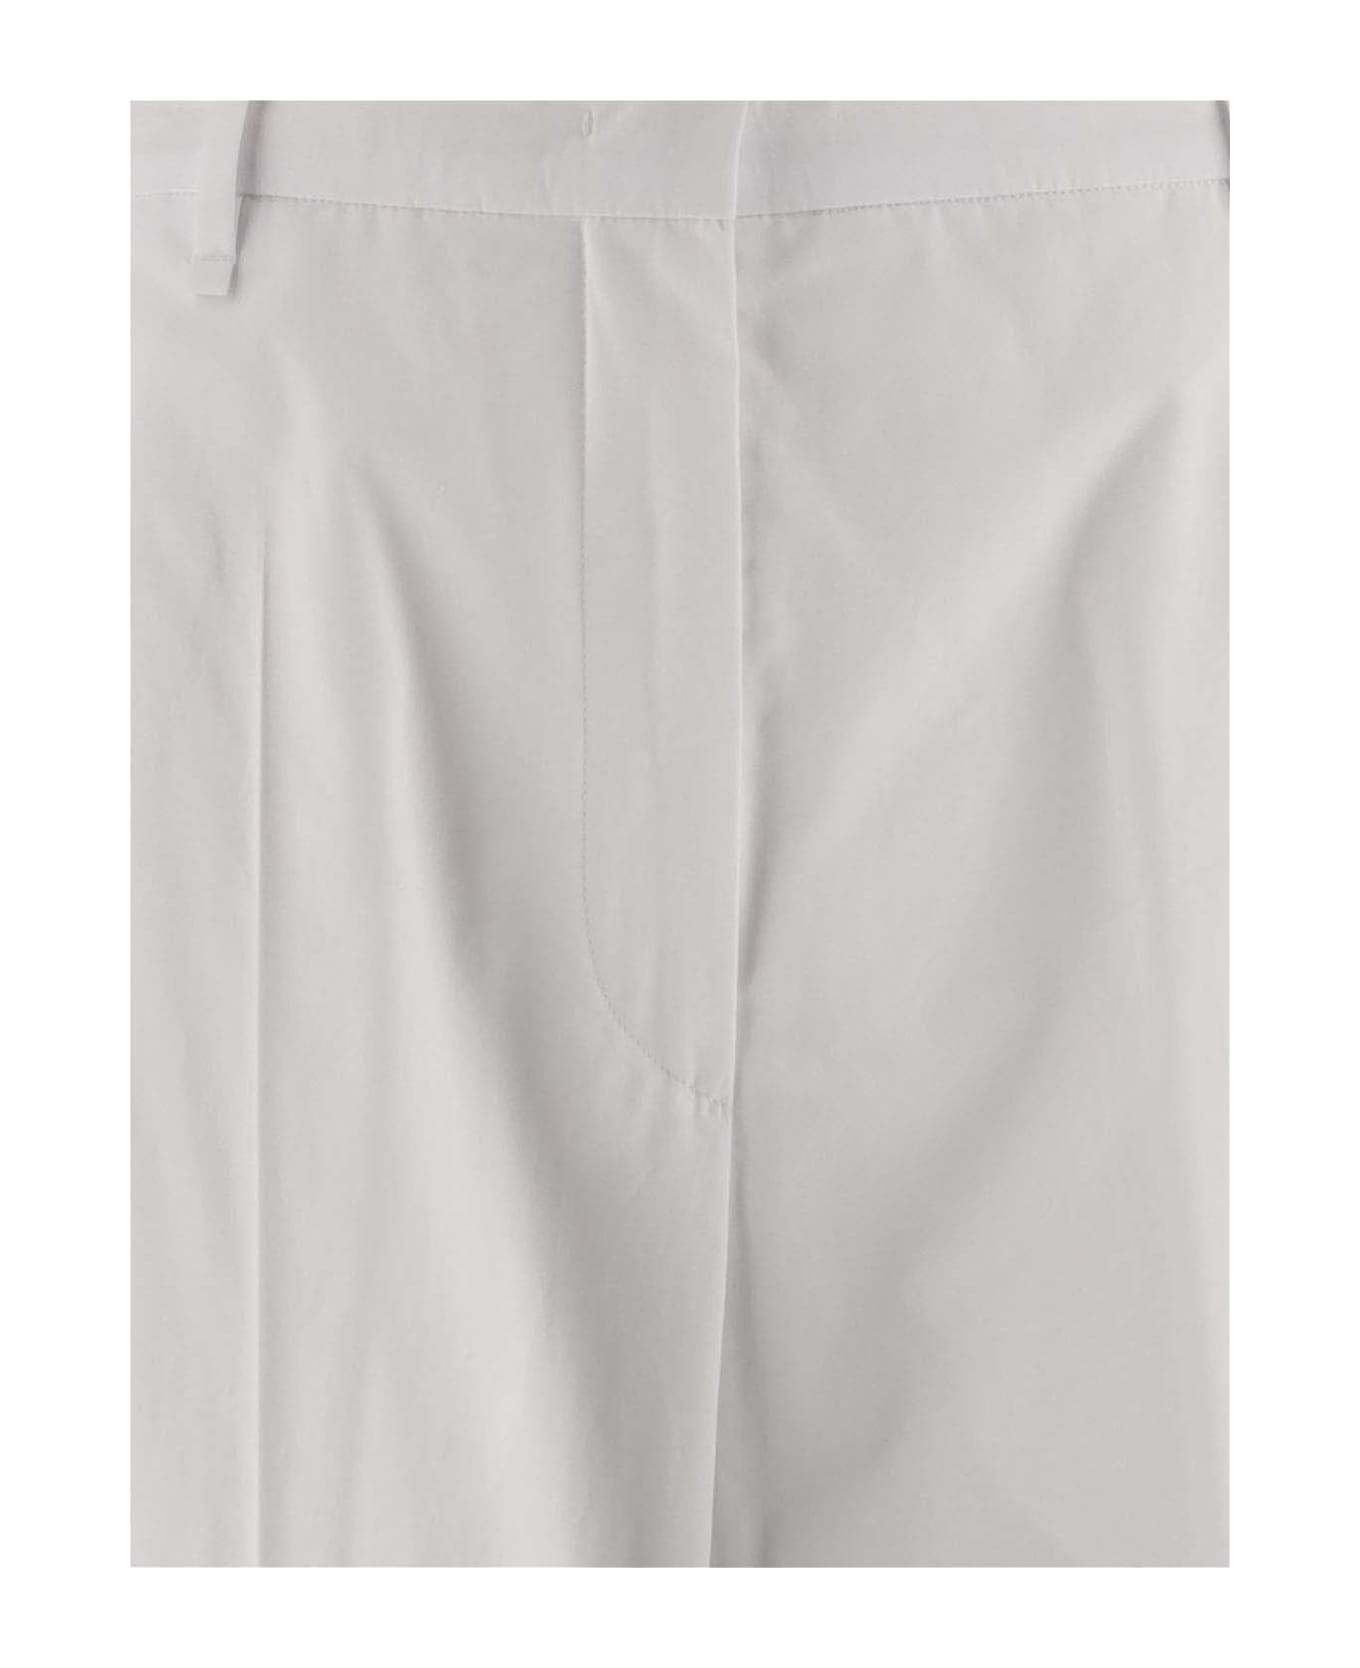 SportMax Cotton Pants - White